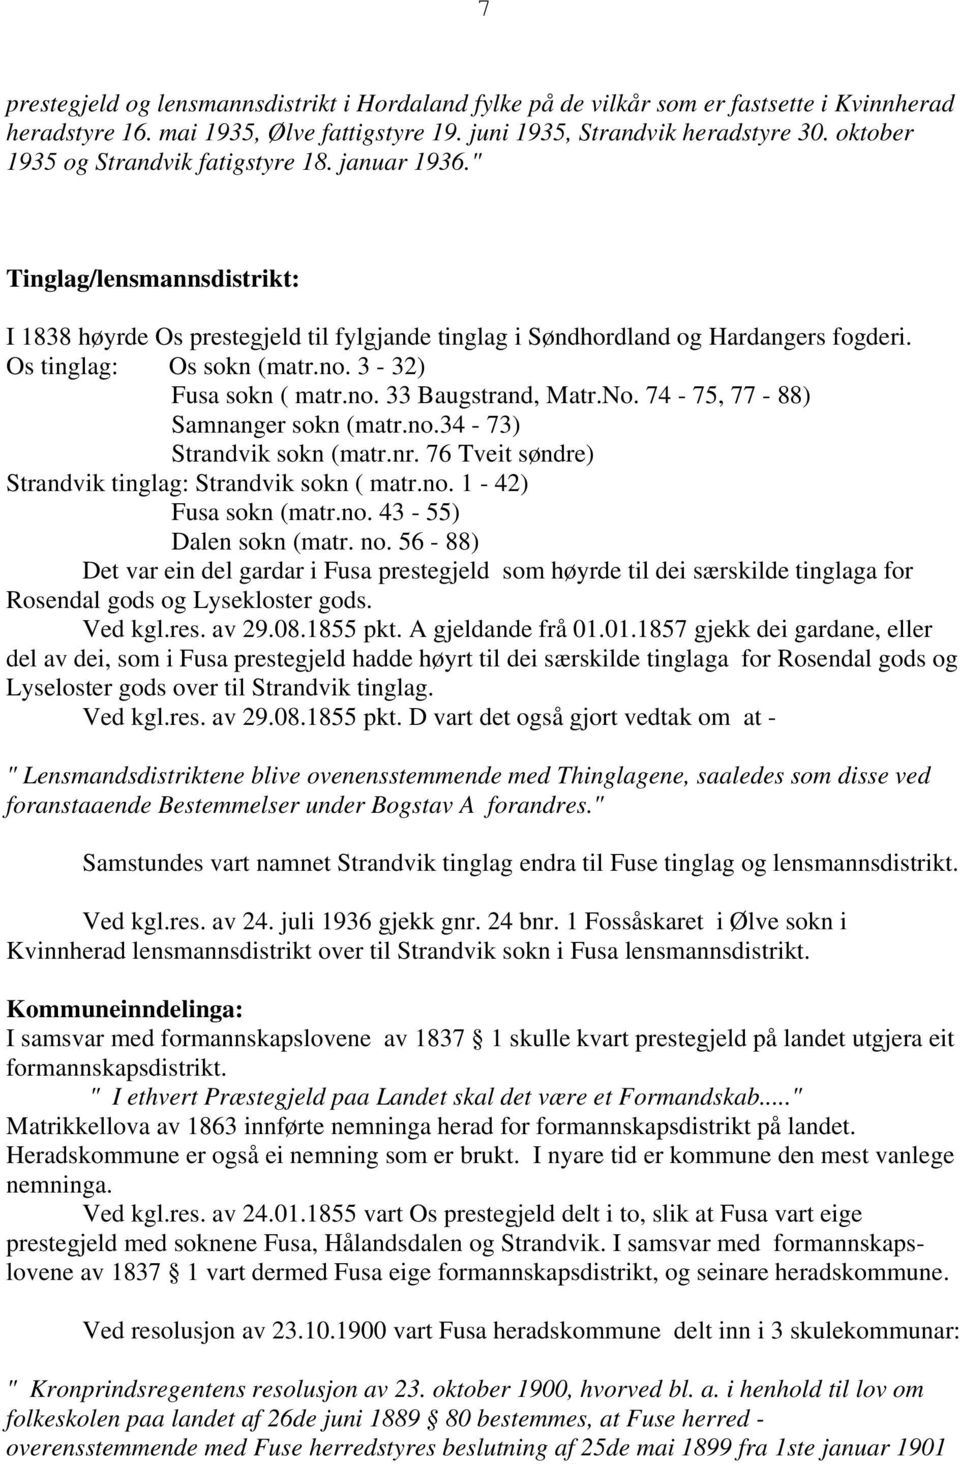 3-32) Fusa sokn ( matr.no. 33 Baugstrand, Matr.No. 74-75, 77-88) Samnanger sokn (matr.no.34-73) Strandvik sokn (matr.nr. 76 Tveit søndre) Strandvik tinglag: Strandvik sokn ( matr.no. 1-42) Fusa sokn (matr.